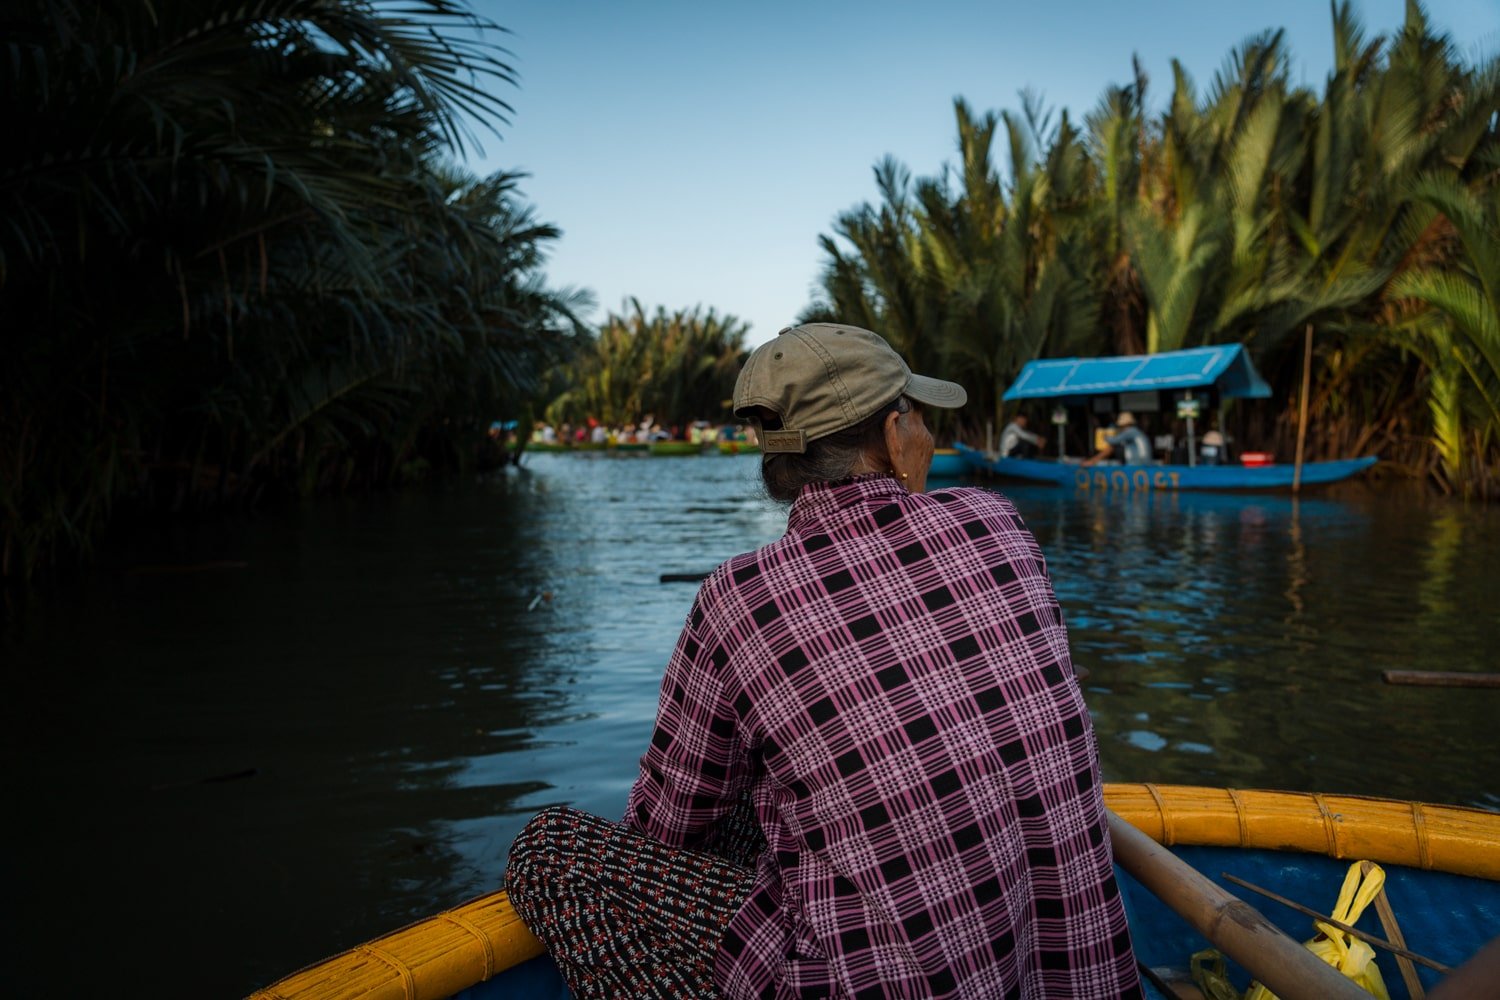 A Vietnamese boat guide rowing through the Bay Mau coconut forest grove on the Thu Bon River near Hoi An, Vietnam.